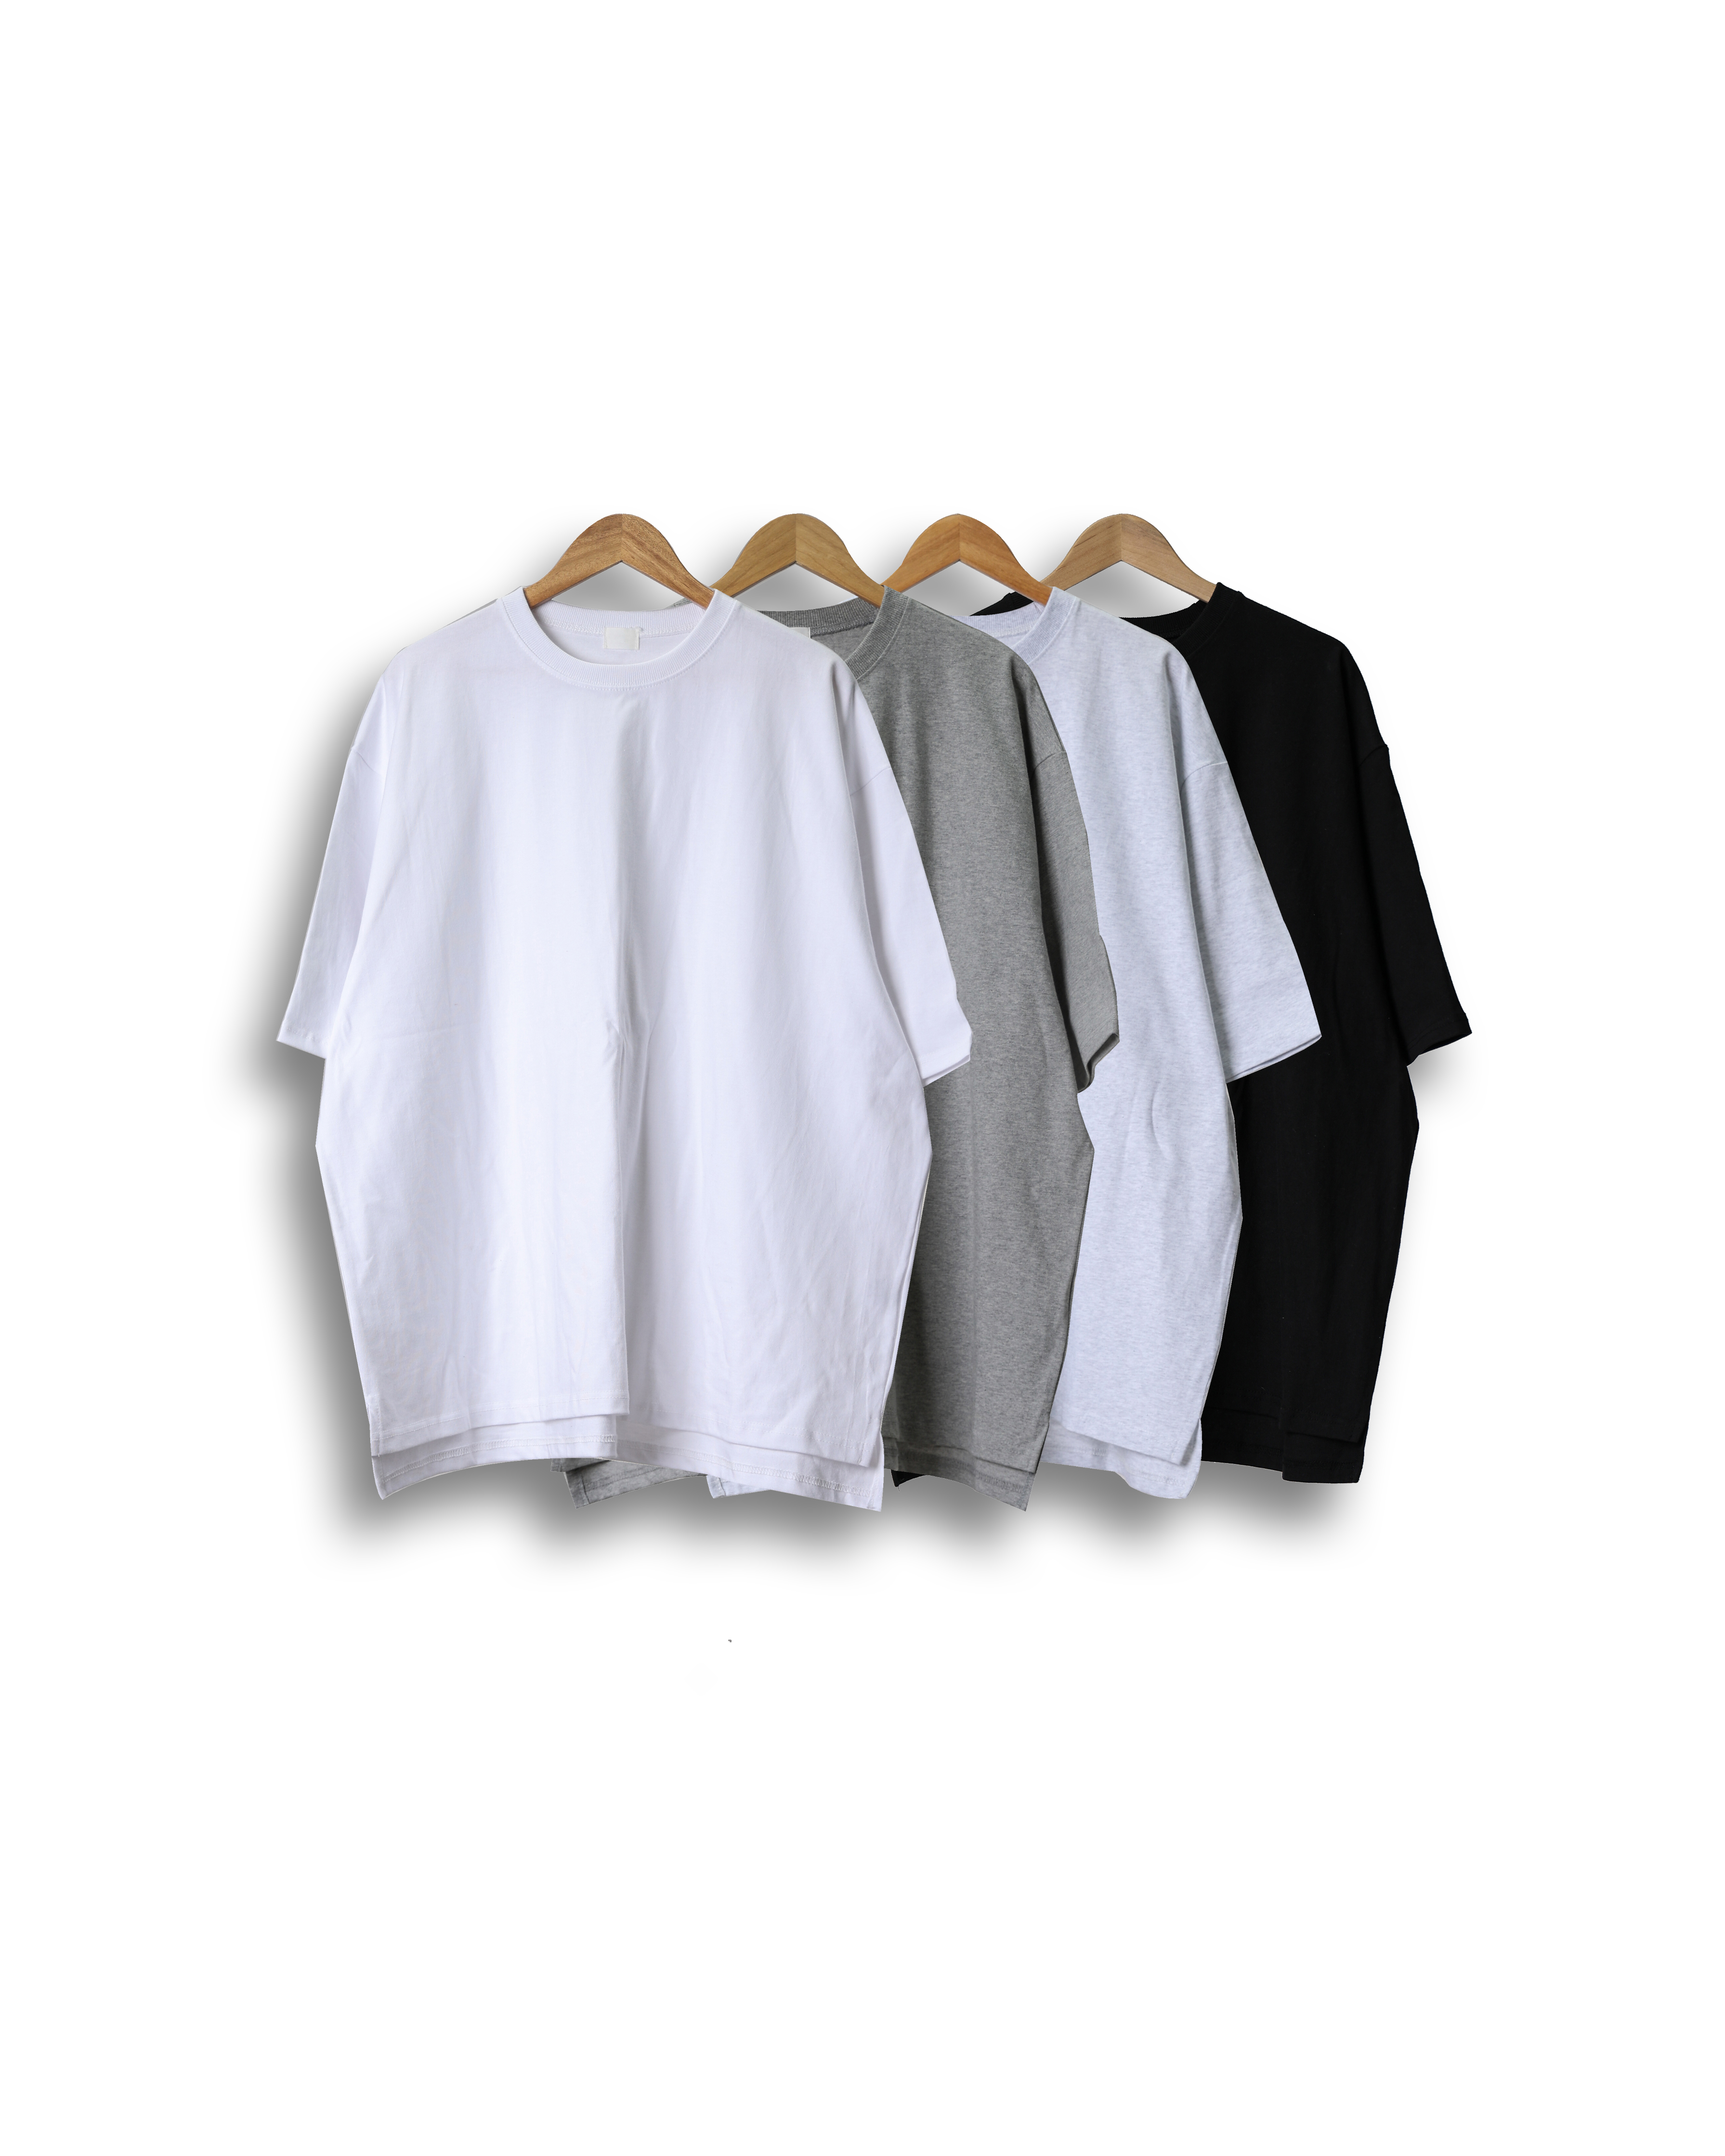 AND One Mile Maxi Sized Basic T Shirts (Black/Gray/Light Gray/White)